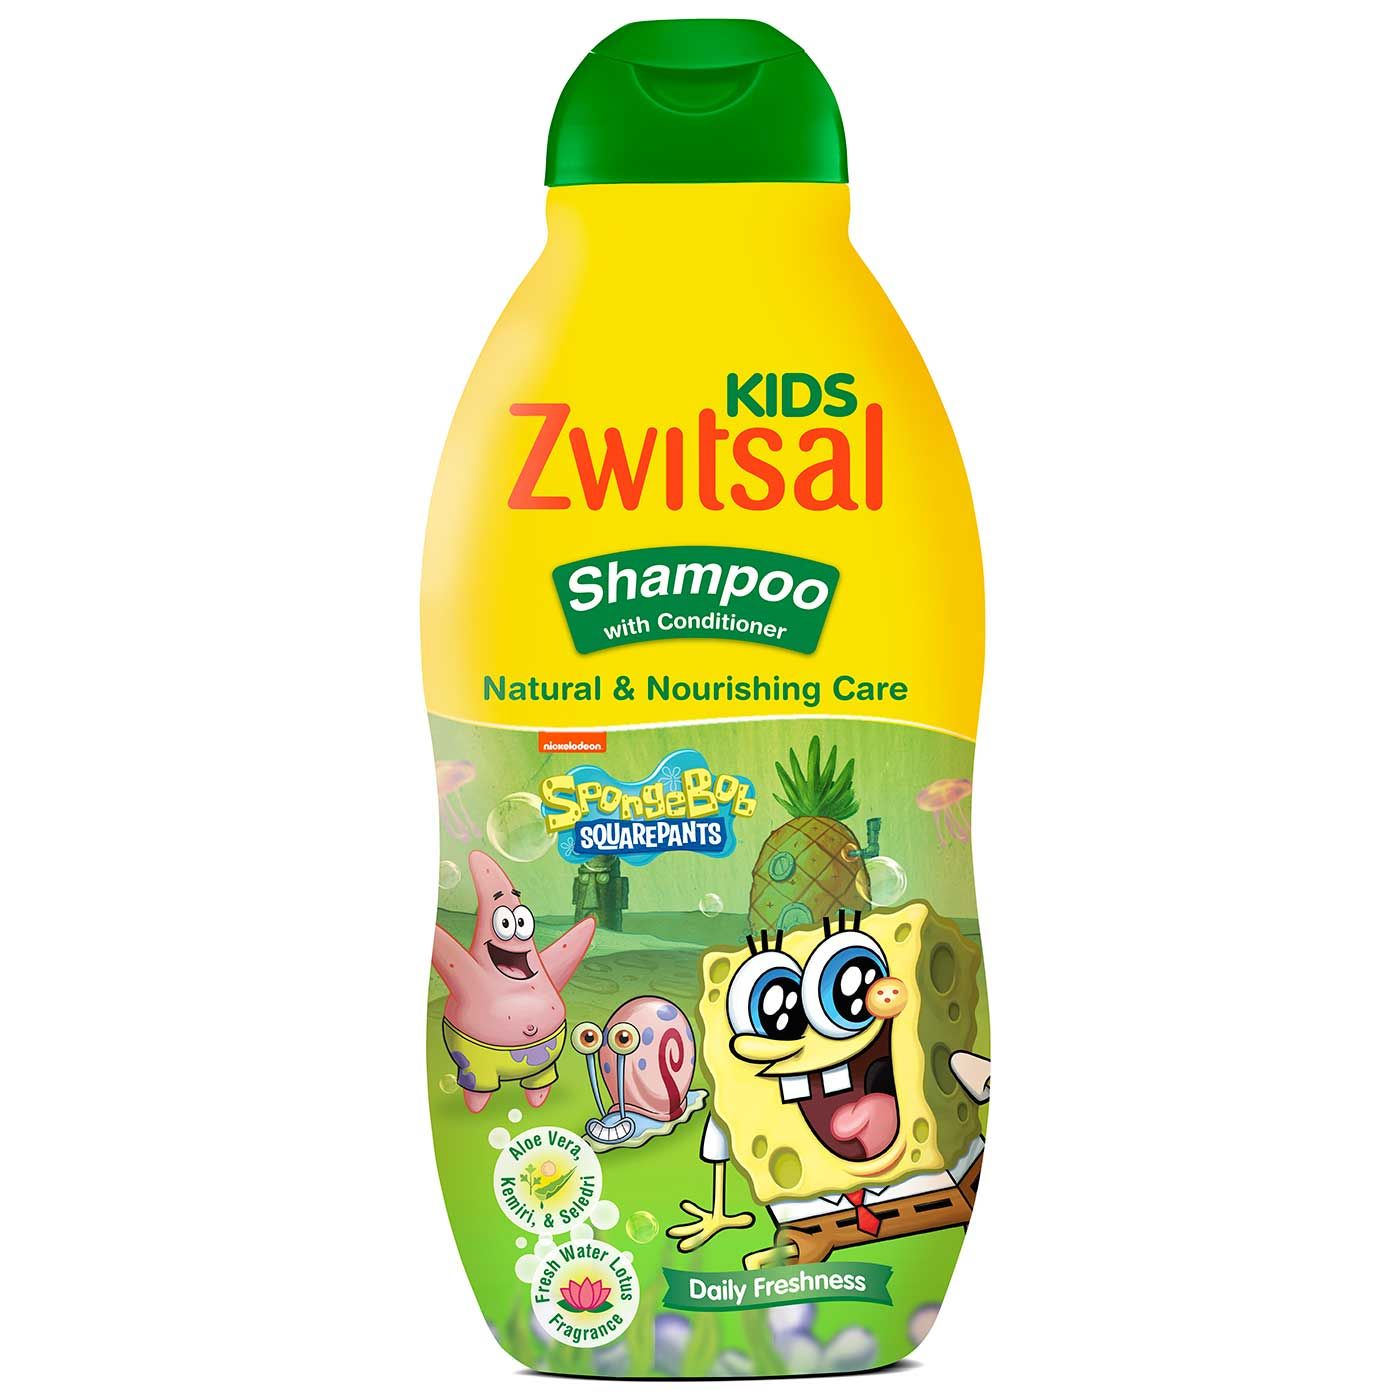 Zwitsal Kids Shampoo Green Natural & Nourishing Care 180ml - 2